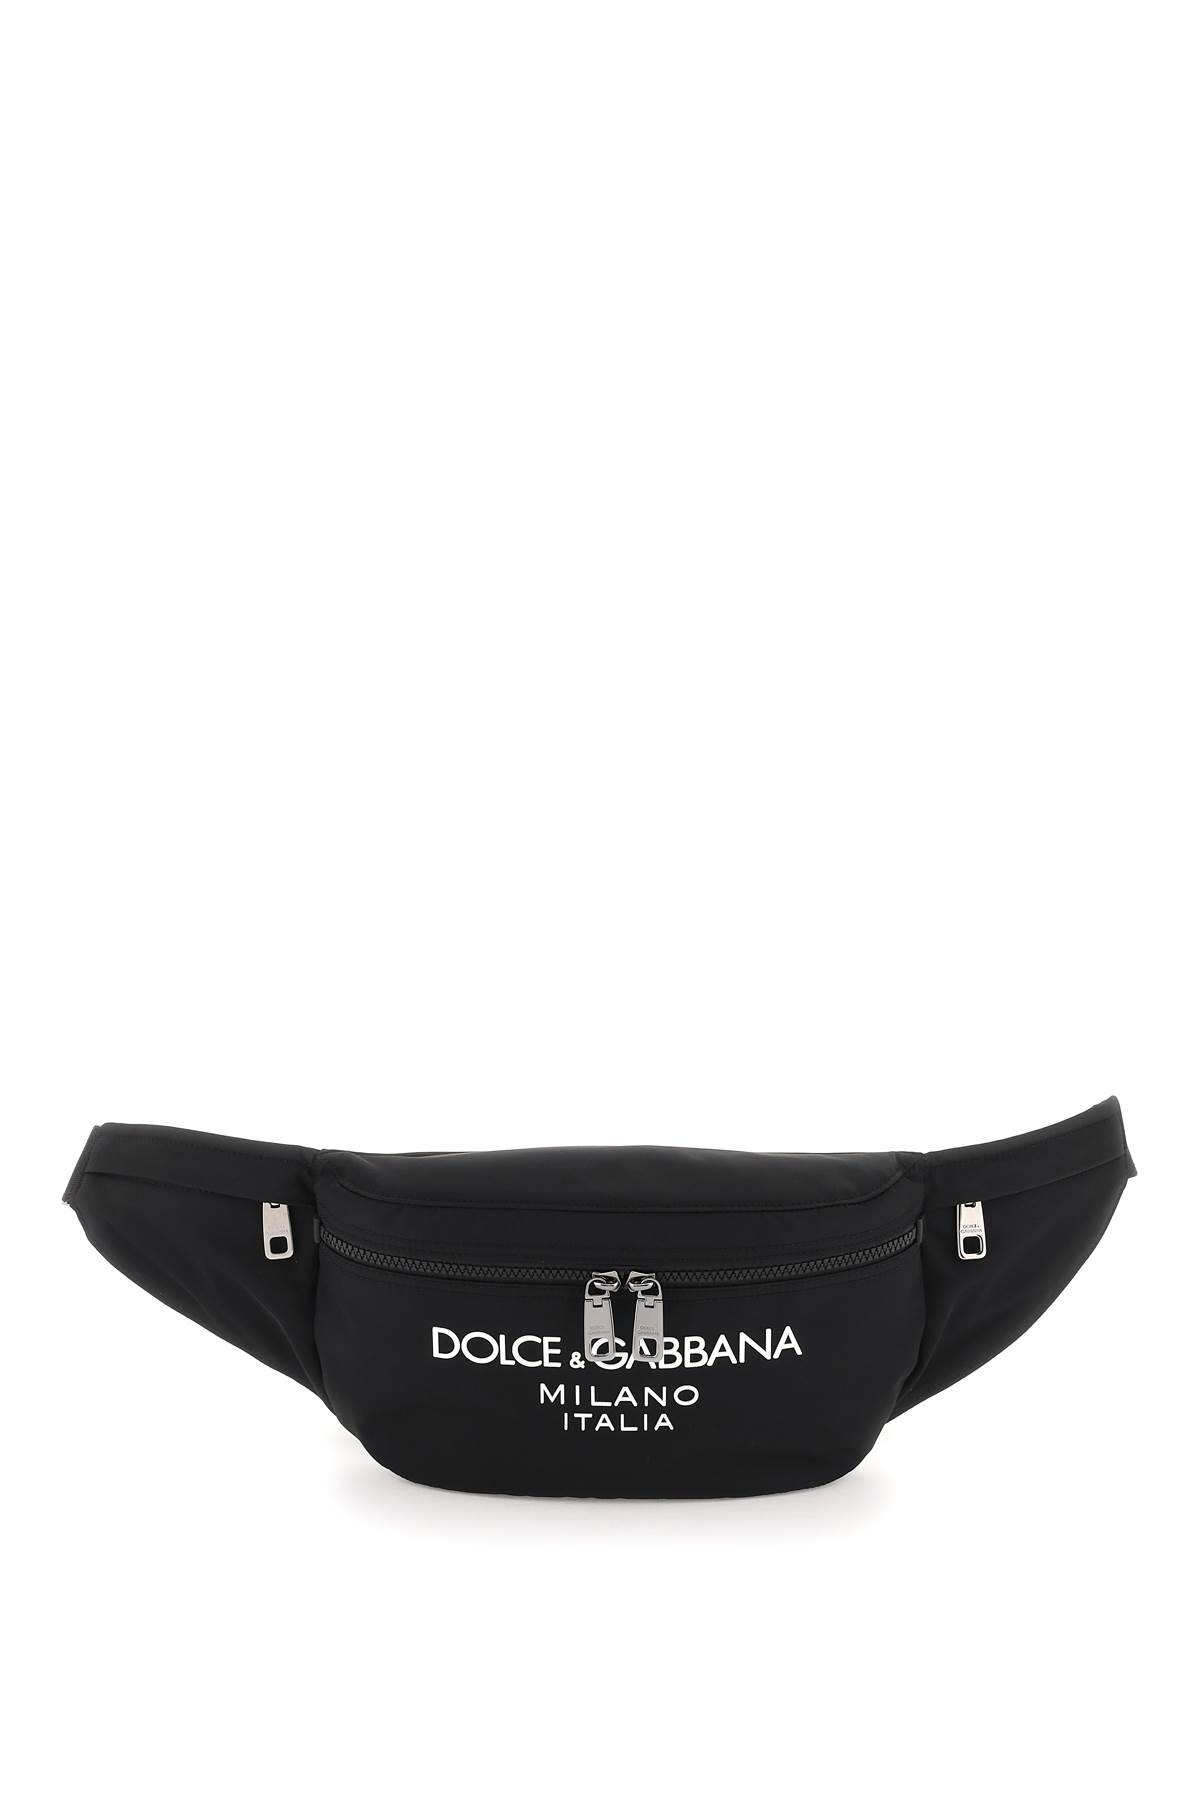 Dolce & Gabbana Nylon Fanny Pack